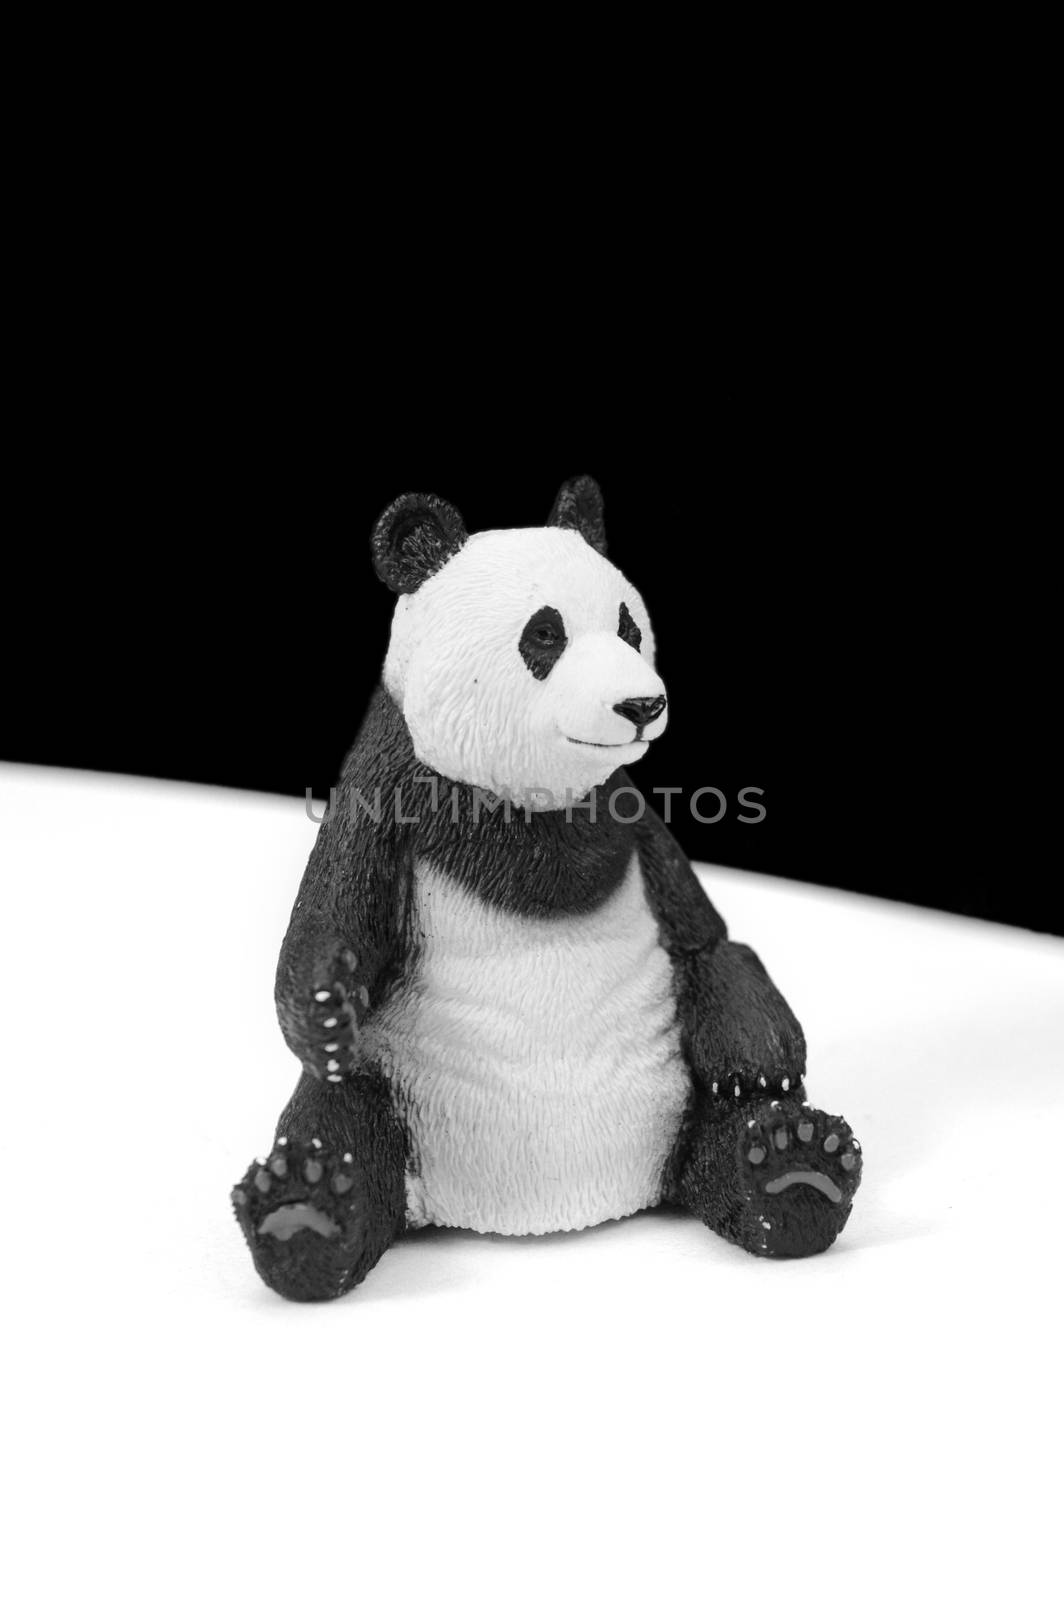 A black and white image of a cute Panda Bear.